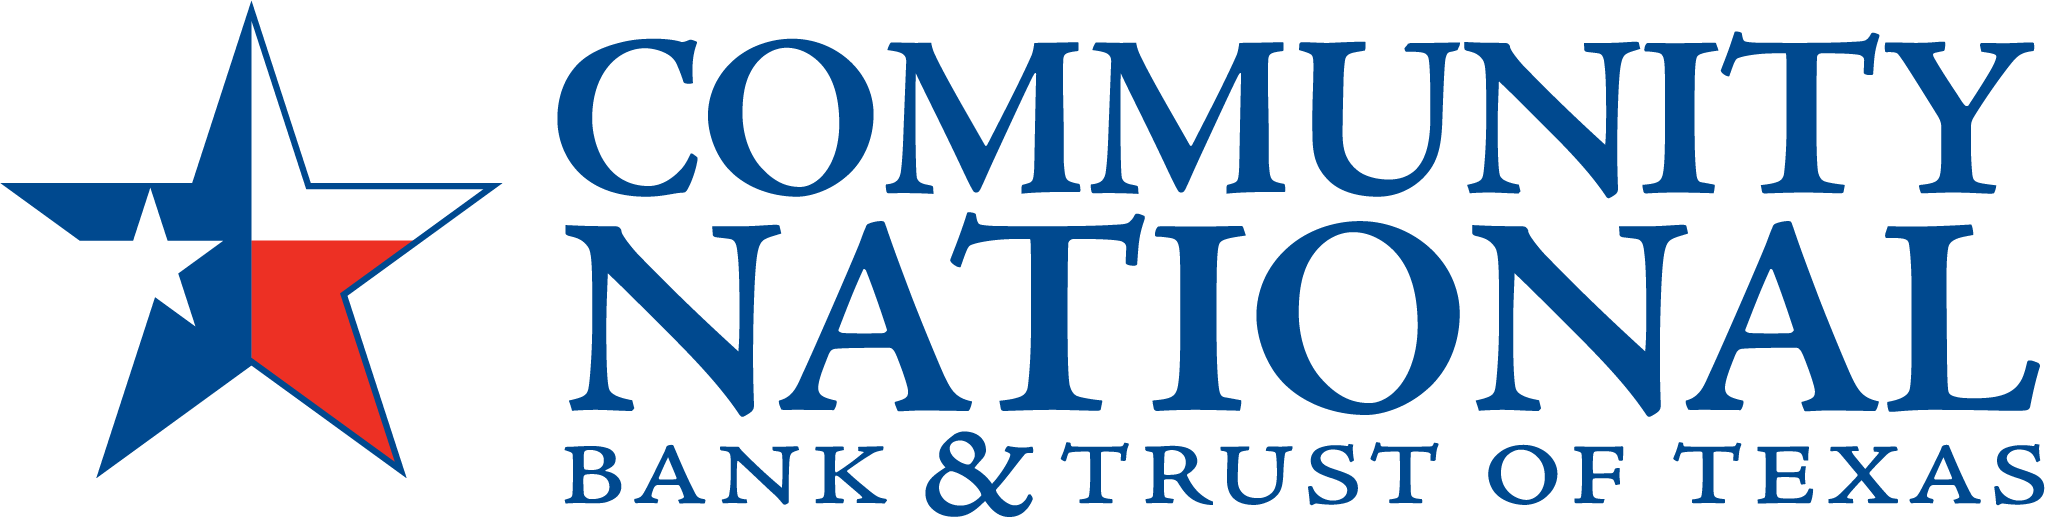 CommunityNational_Logo